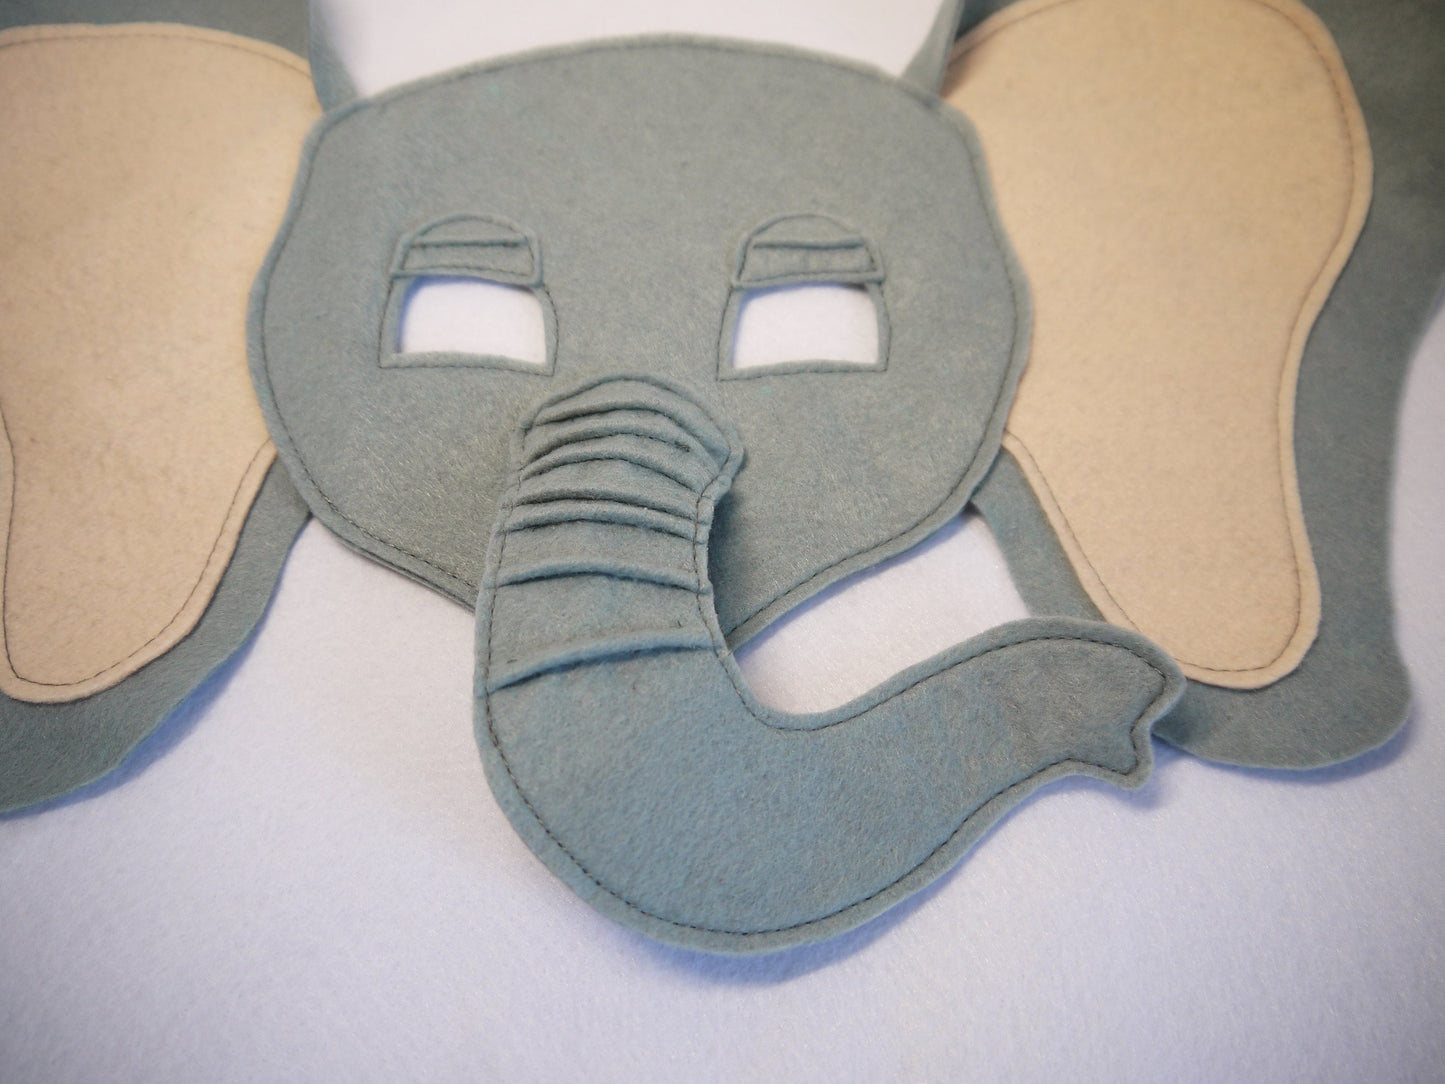 Elephant mask costume book day Birthday children adult gift